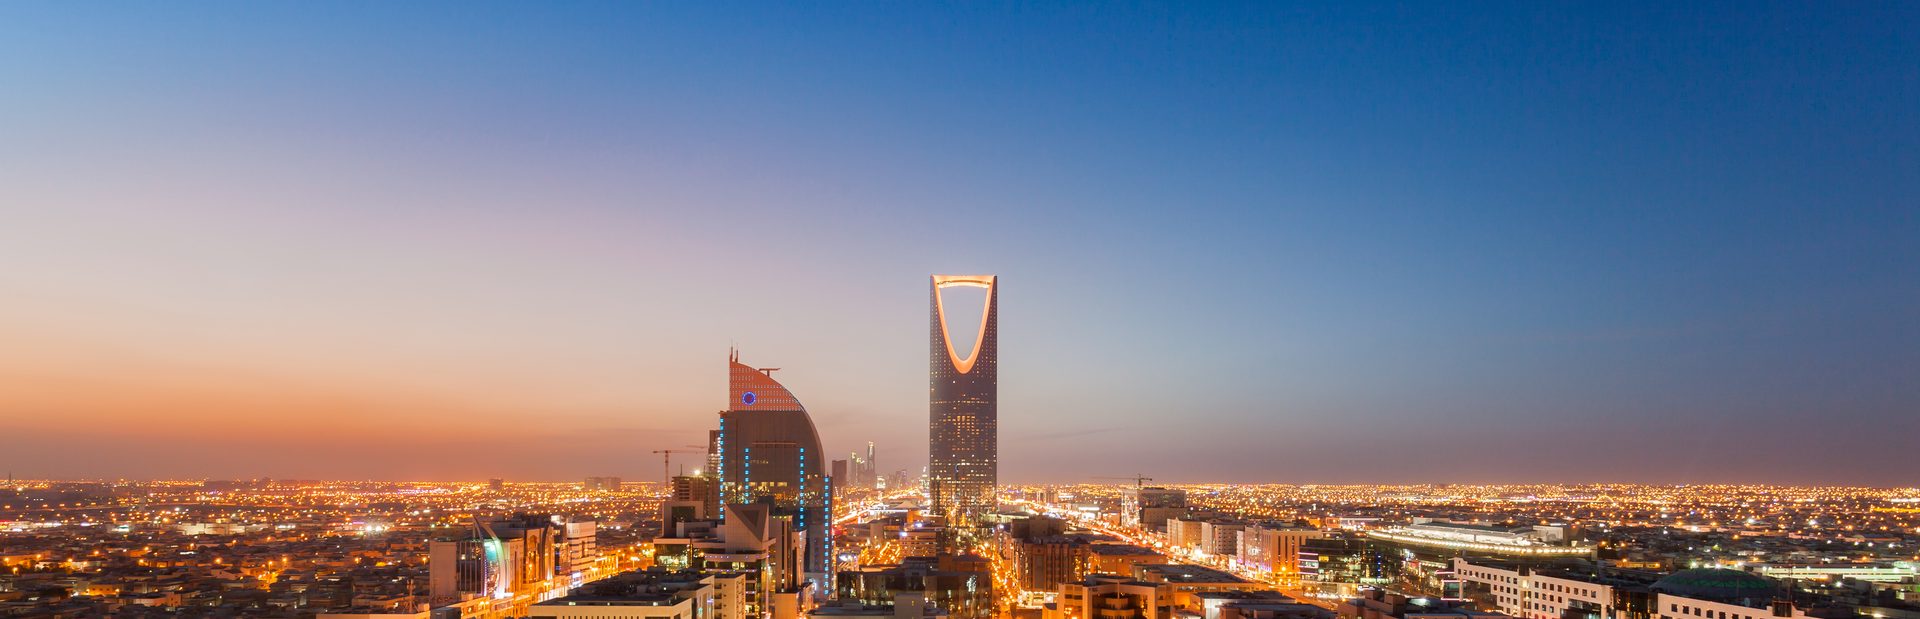 Saudi Arabia photo tour